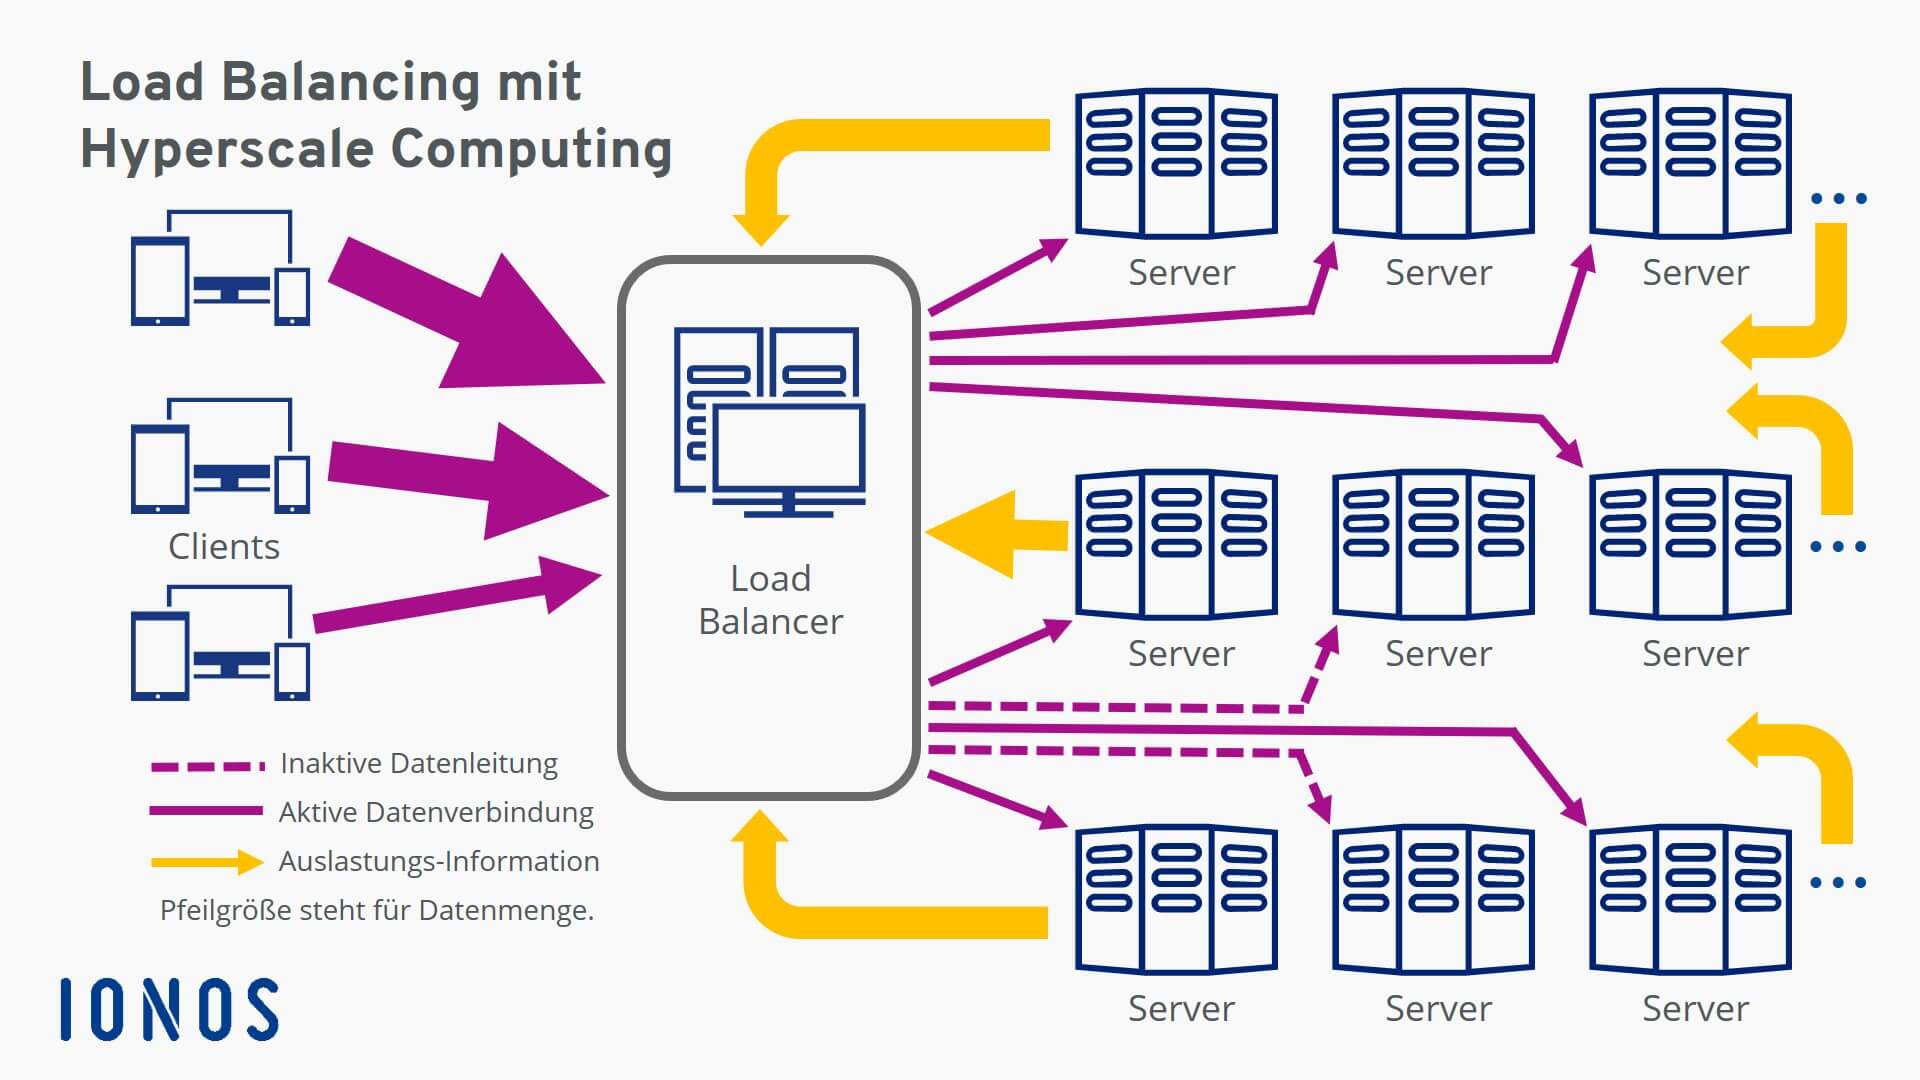 Load Balancing mit Hyperscale-Computing (Schema)